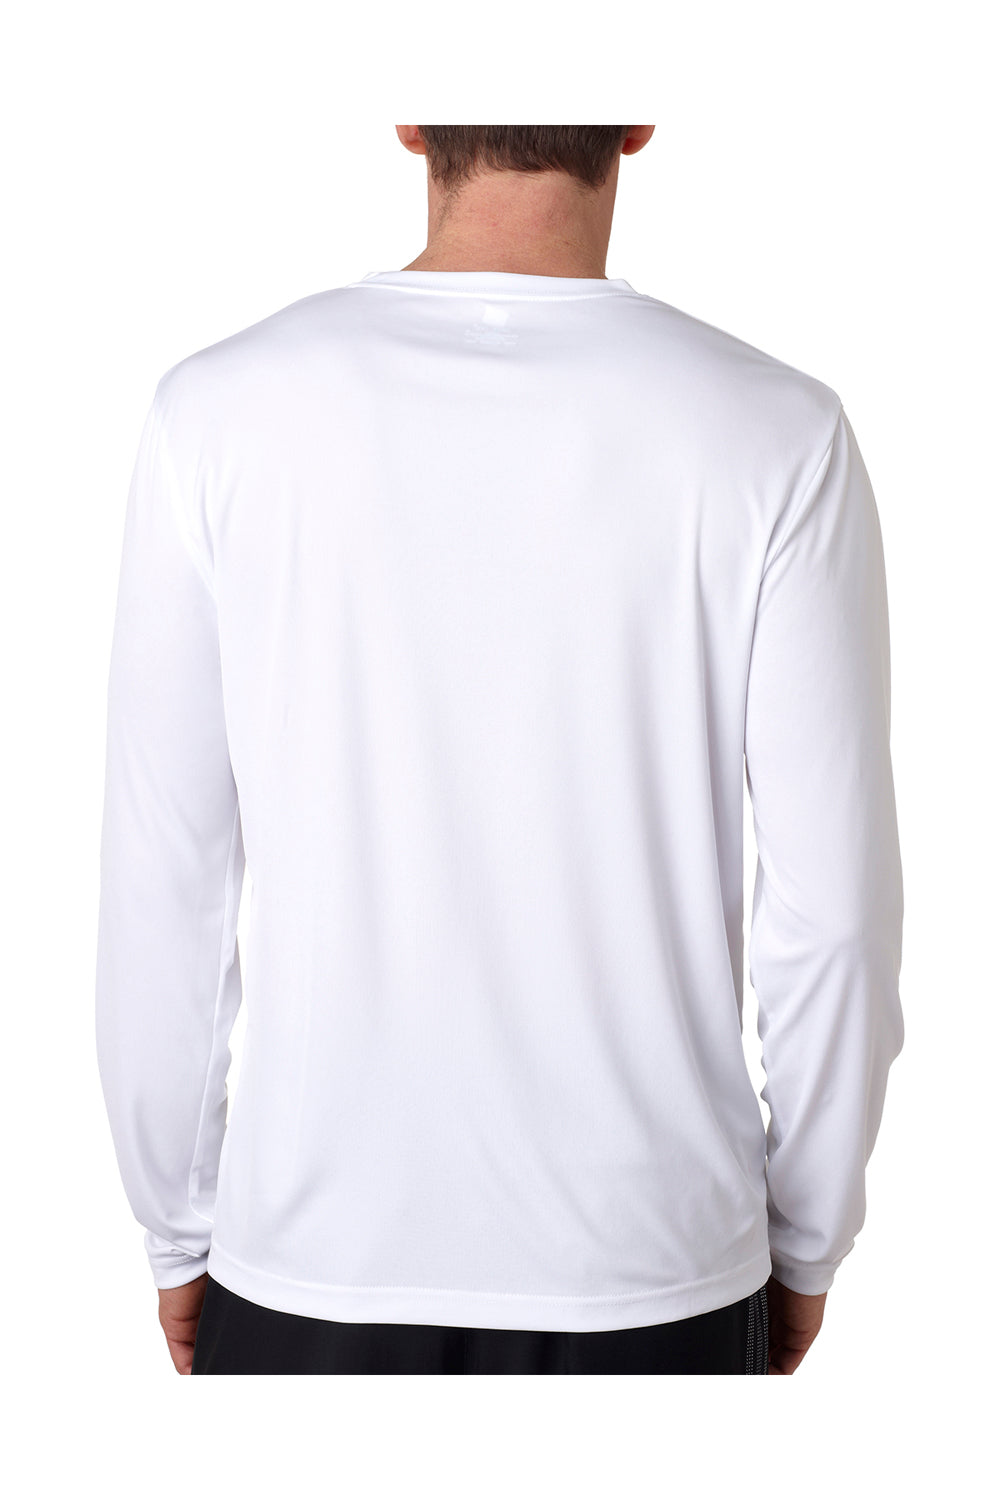 Hanes 482L Mens Cool DRI FreshIQ Moisture Wicking Long Sleeve Crewneck T-Shirt White Back